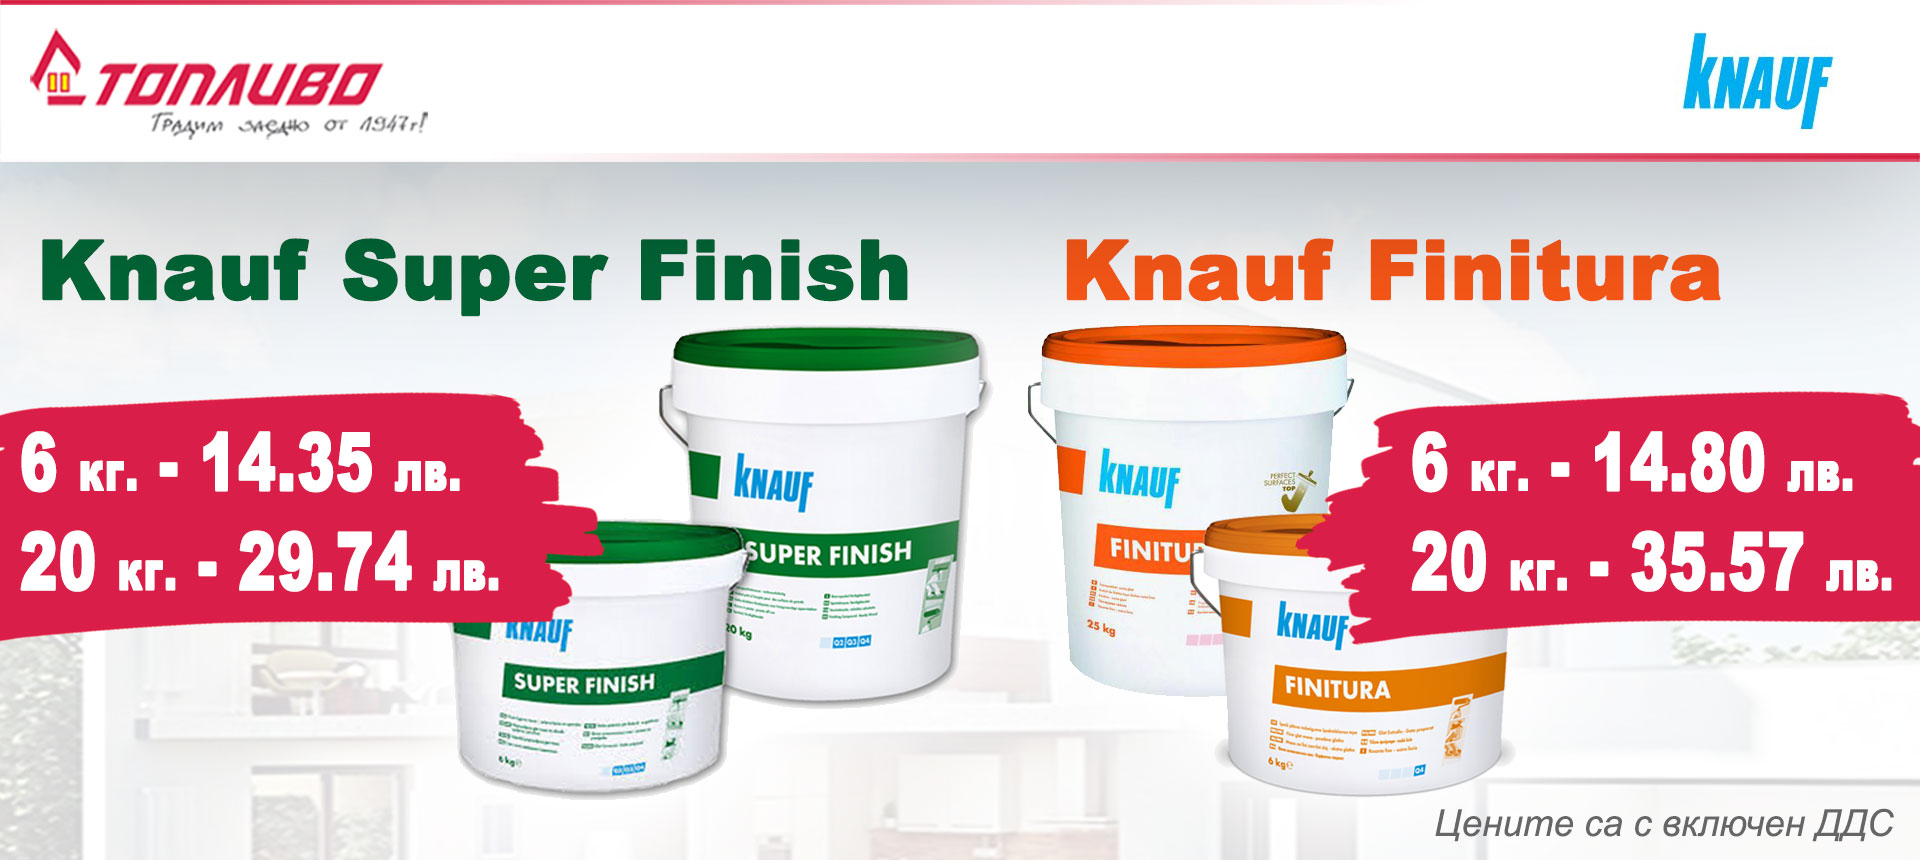 KNAUF Superfinish и Knauf Finitura на специални цени